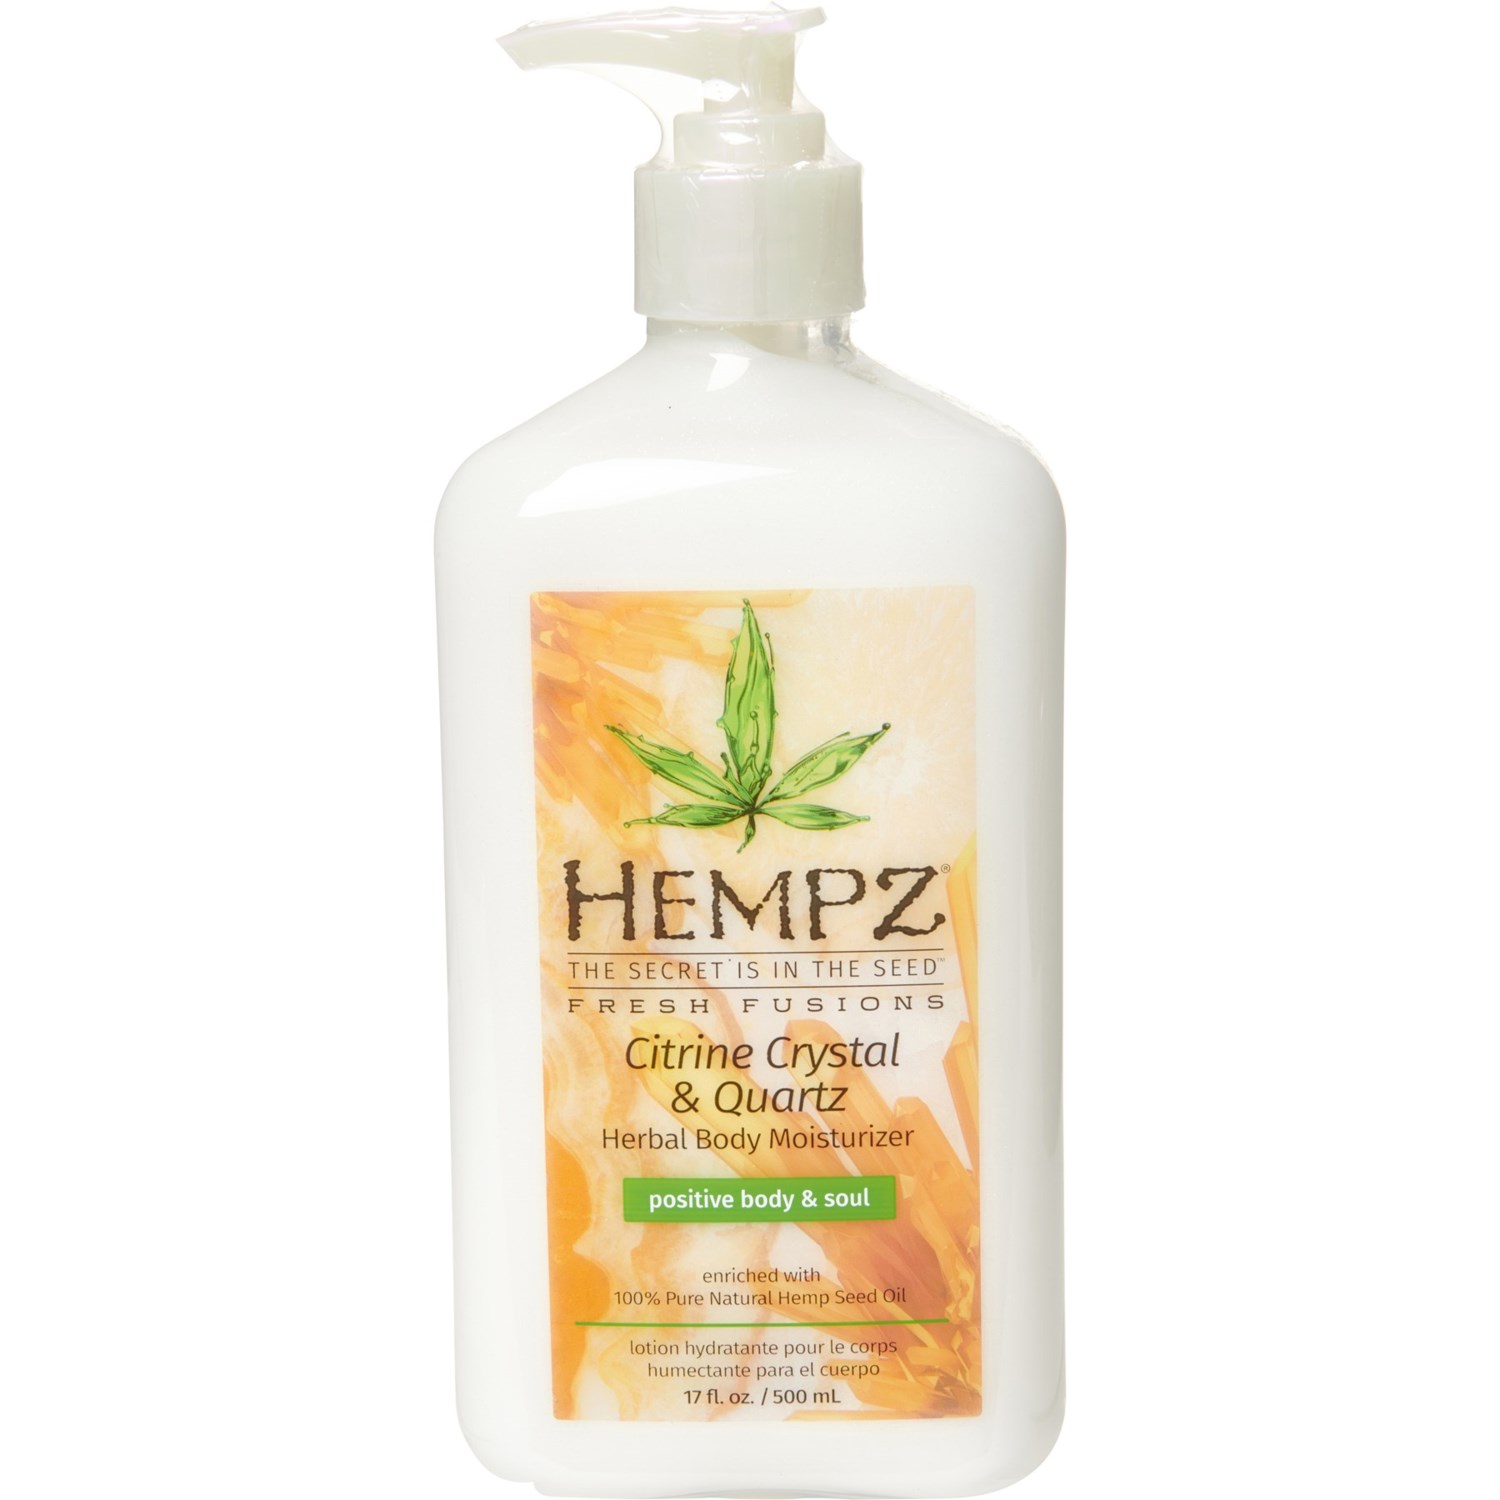 Hempz Fresh Fusions Citrine Crystal and Quartz Herbal Body Moisturizer - 17 oz.